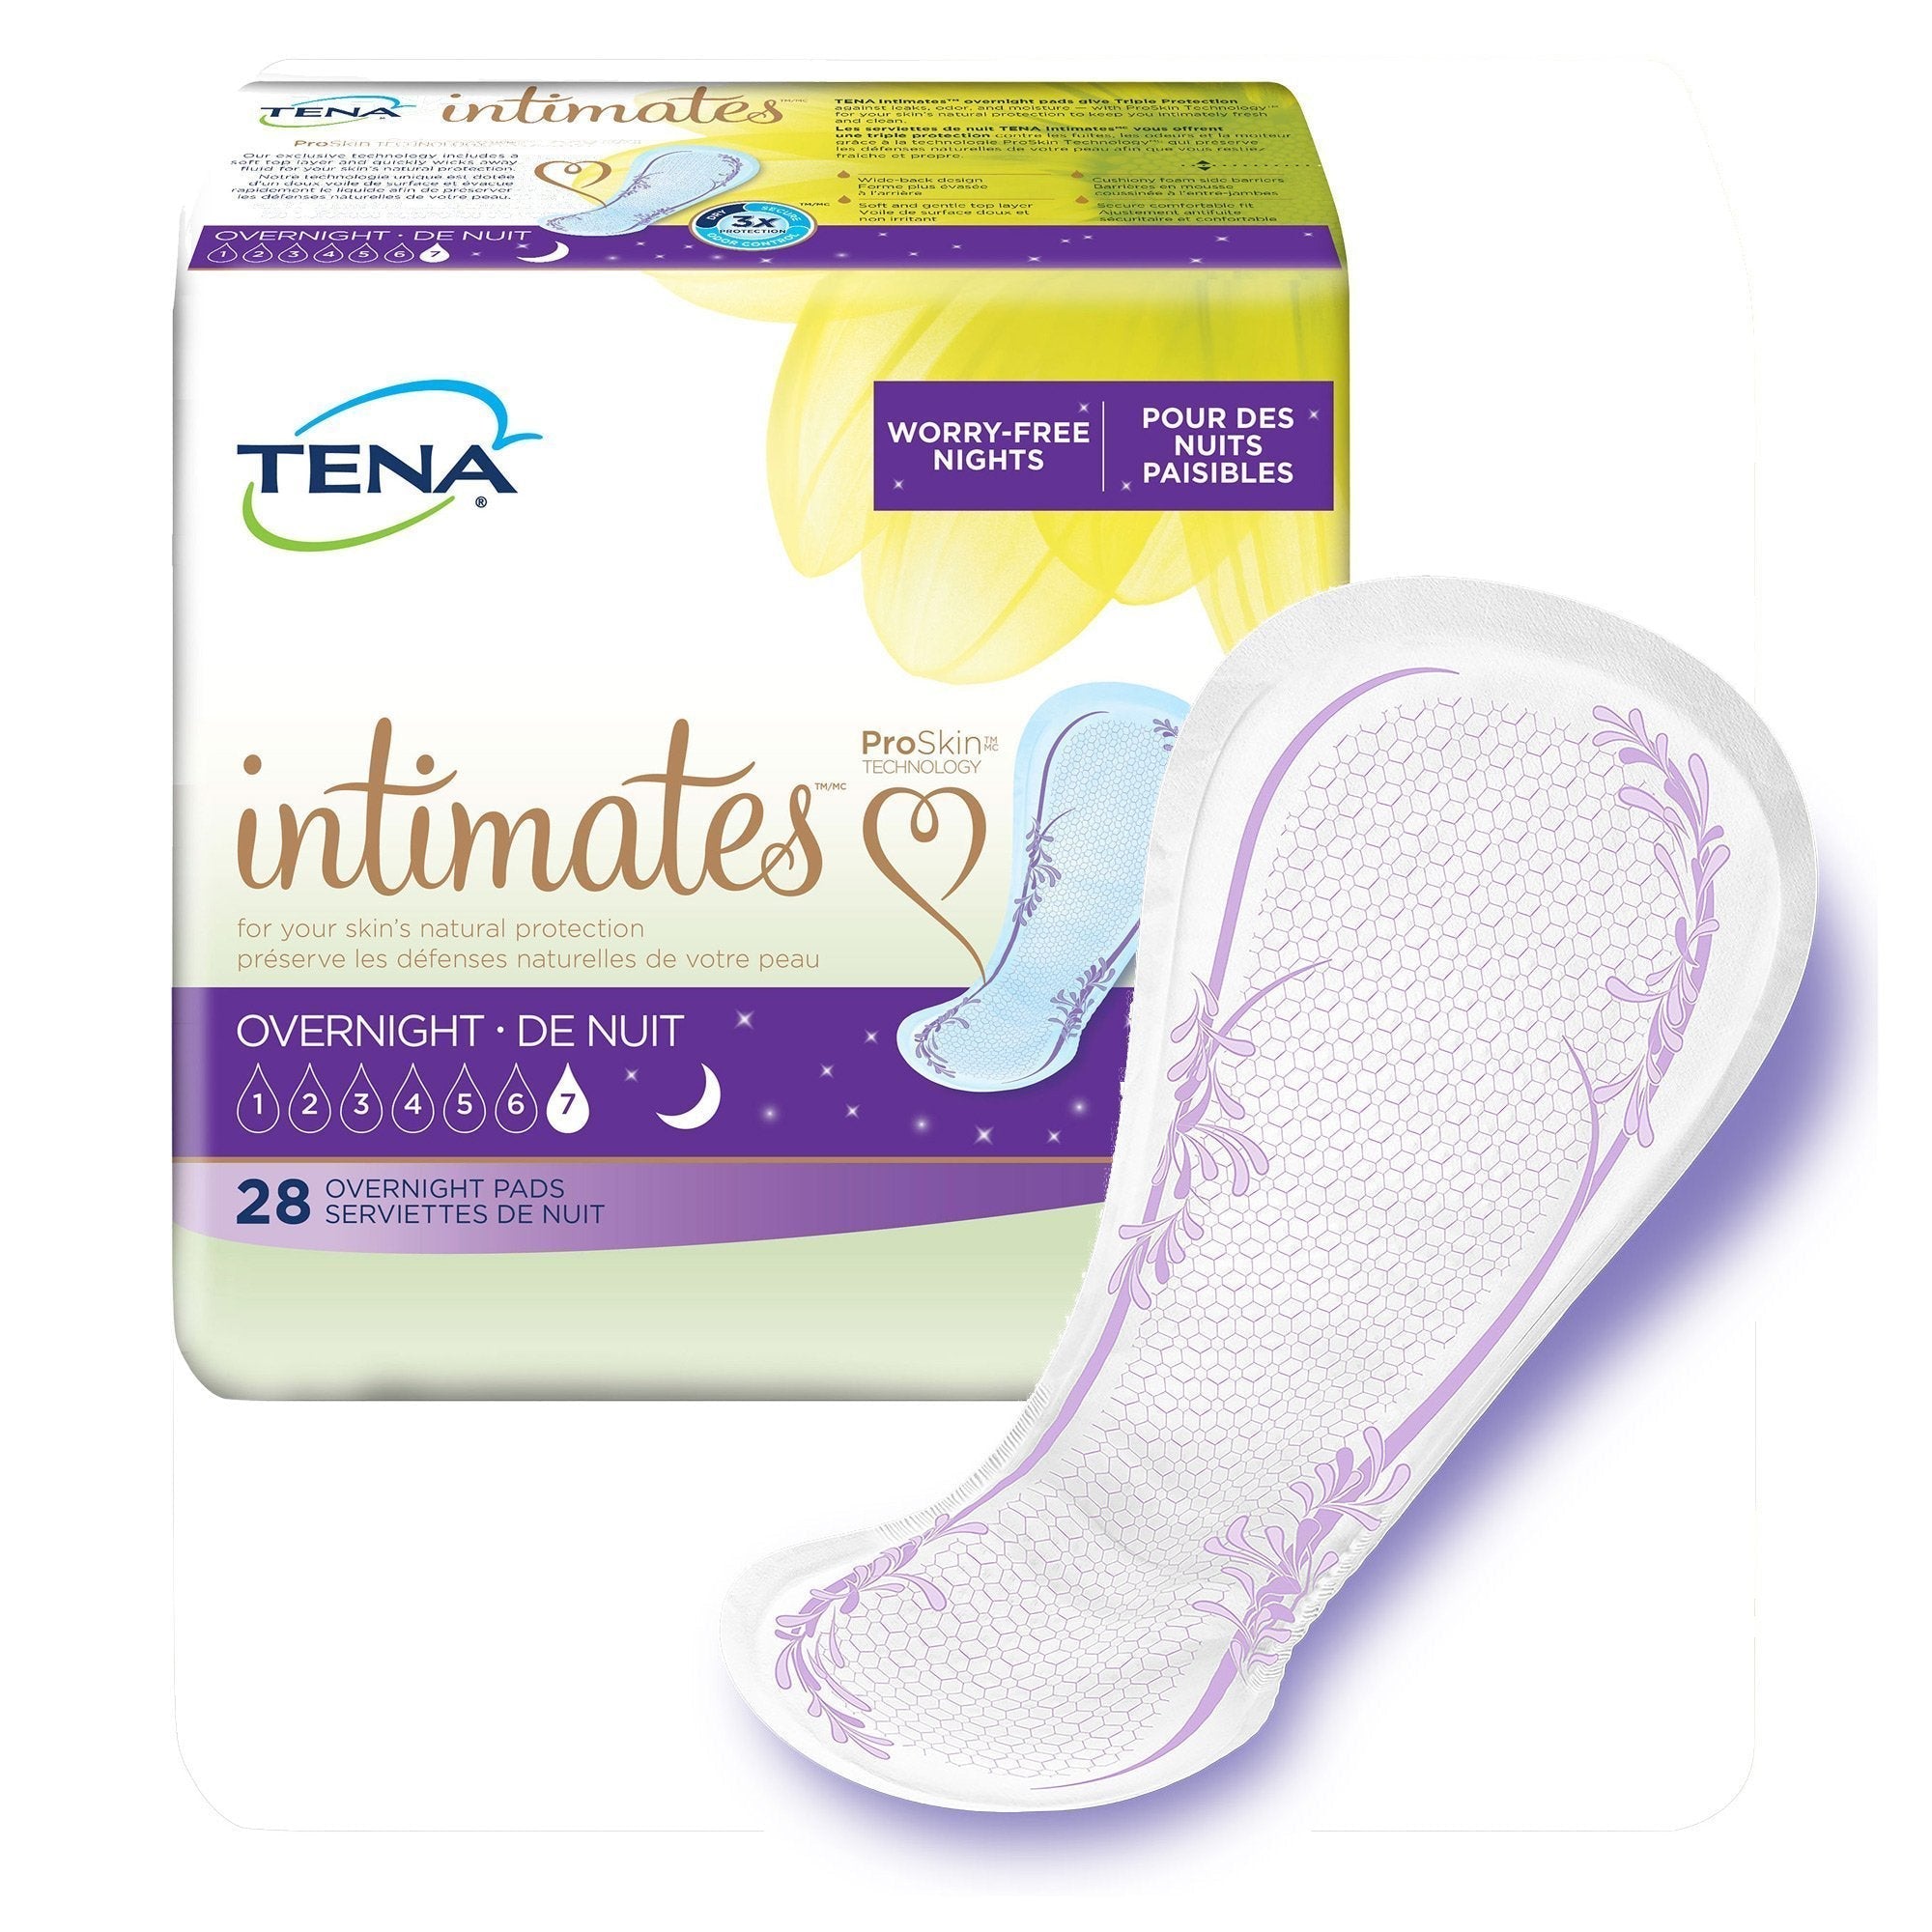 TENA Overnight Super Protective Underwear – Healthcare Solutions